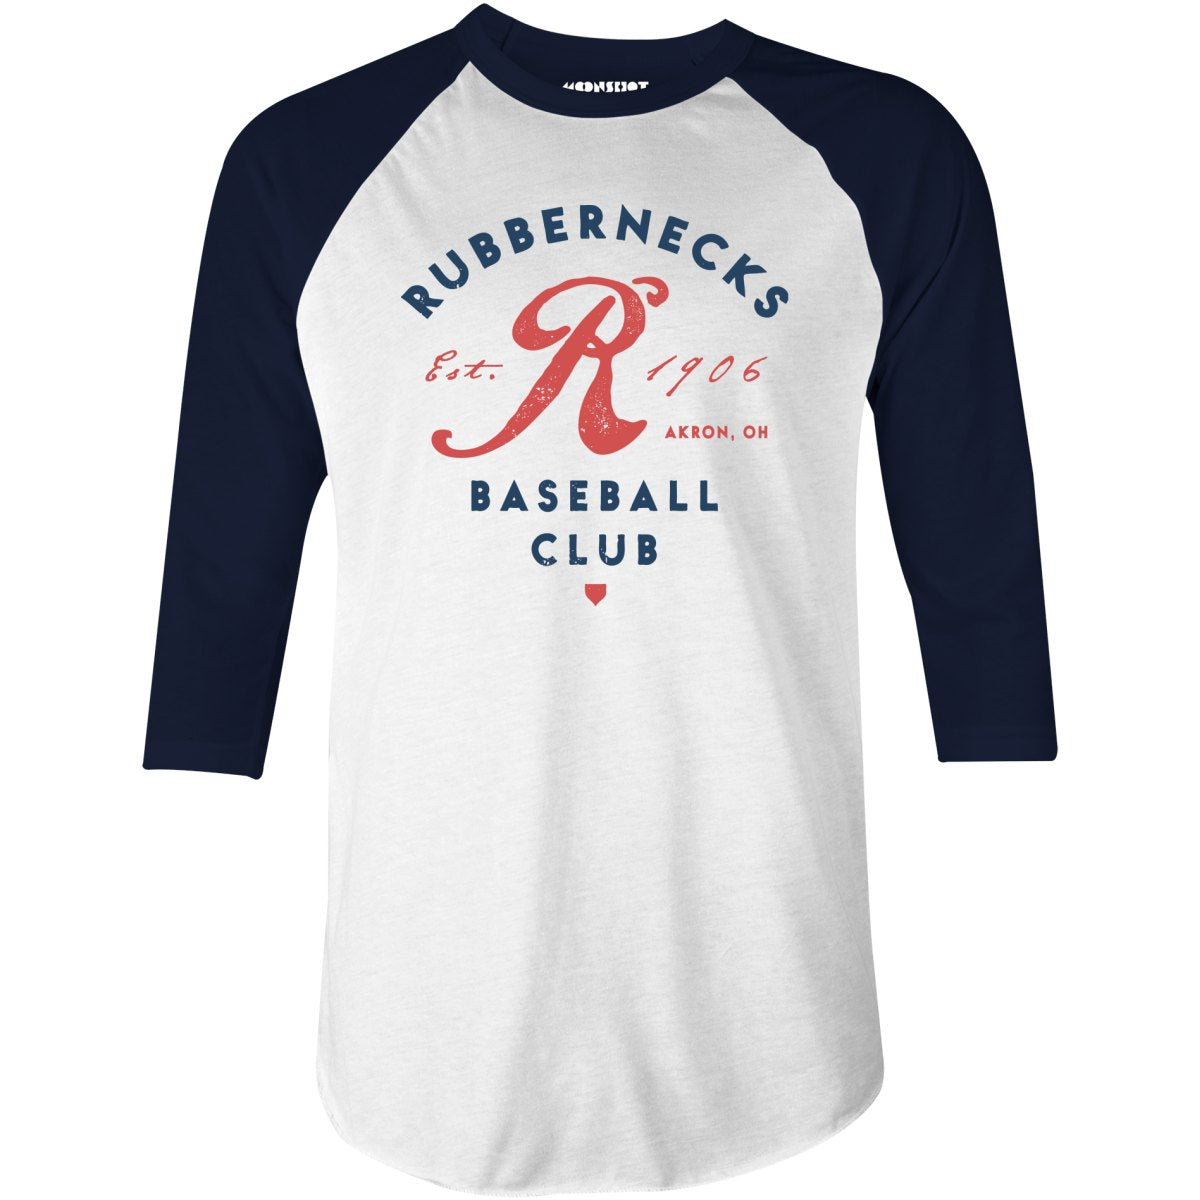 Akron Rubbernecks - Ohio - Vintage Defunct Baseball Teams - 3/4 Sleeve Raglan T-Shirt